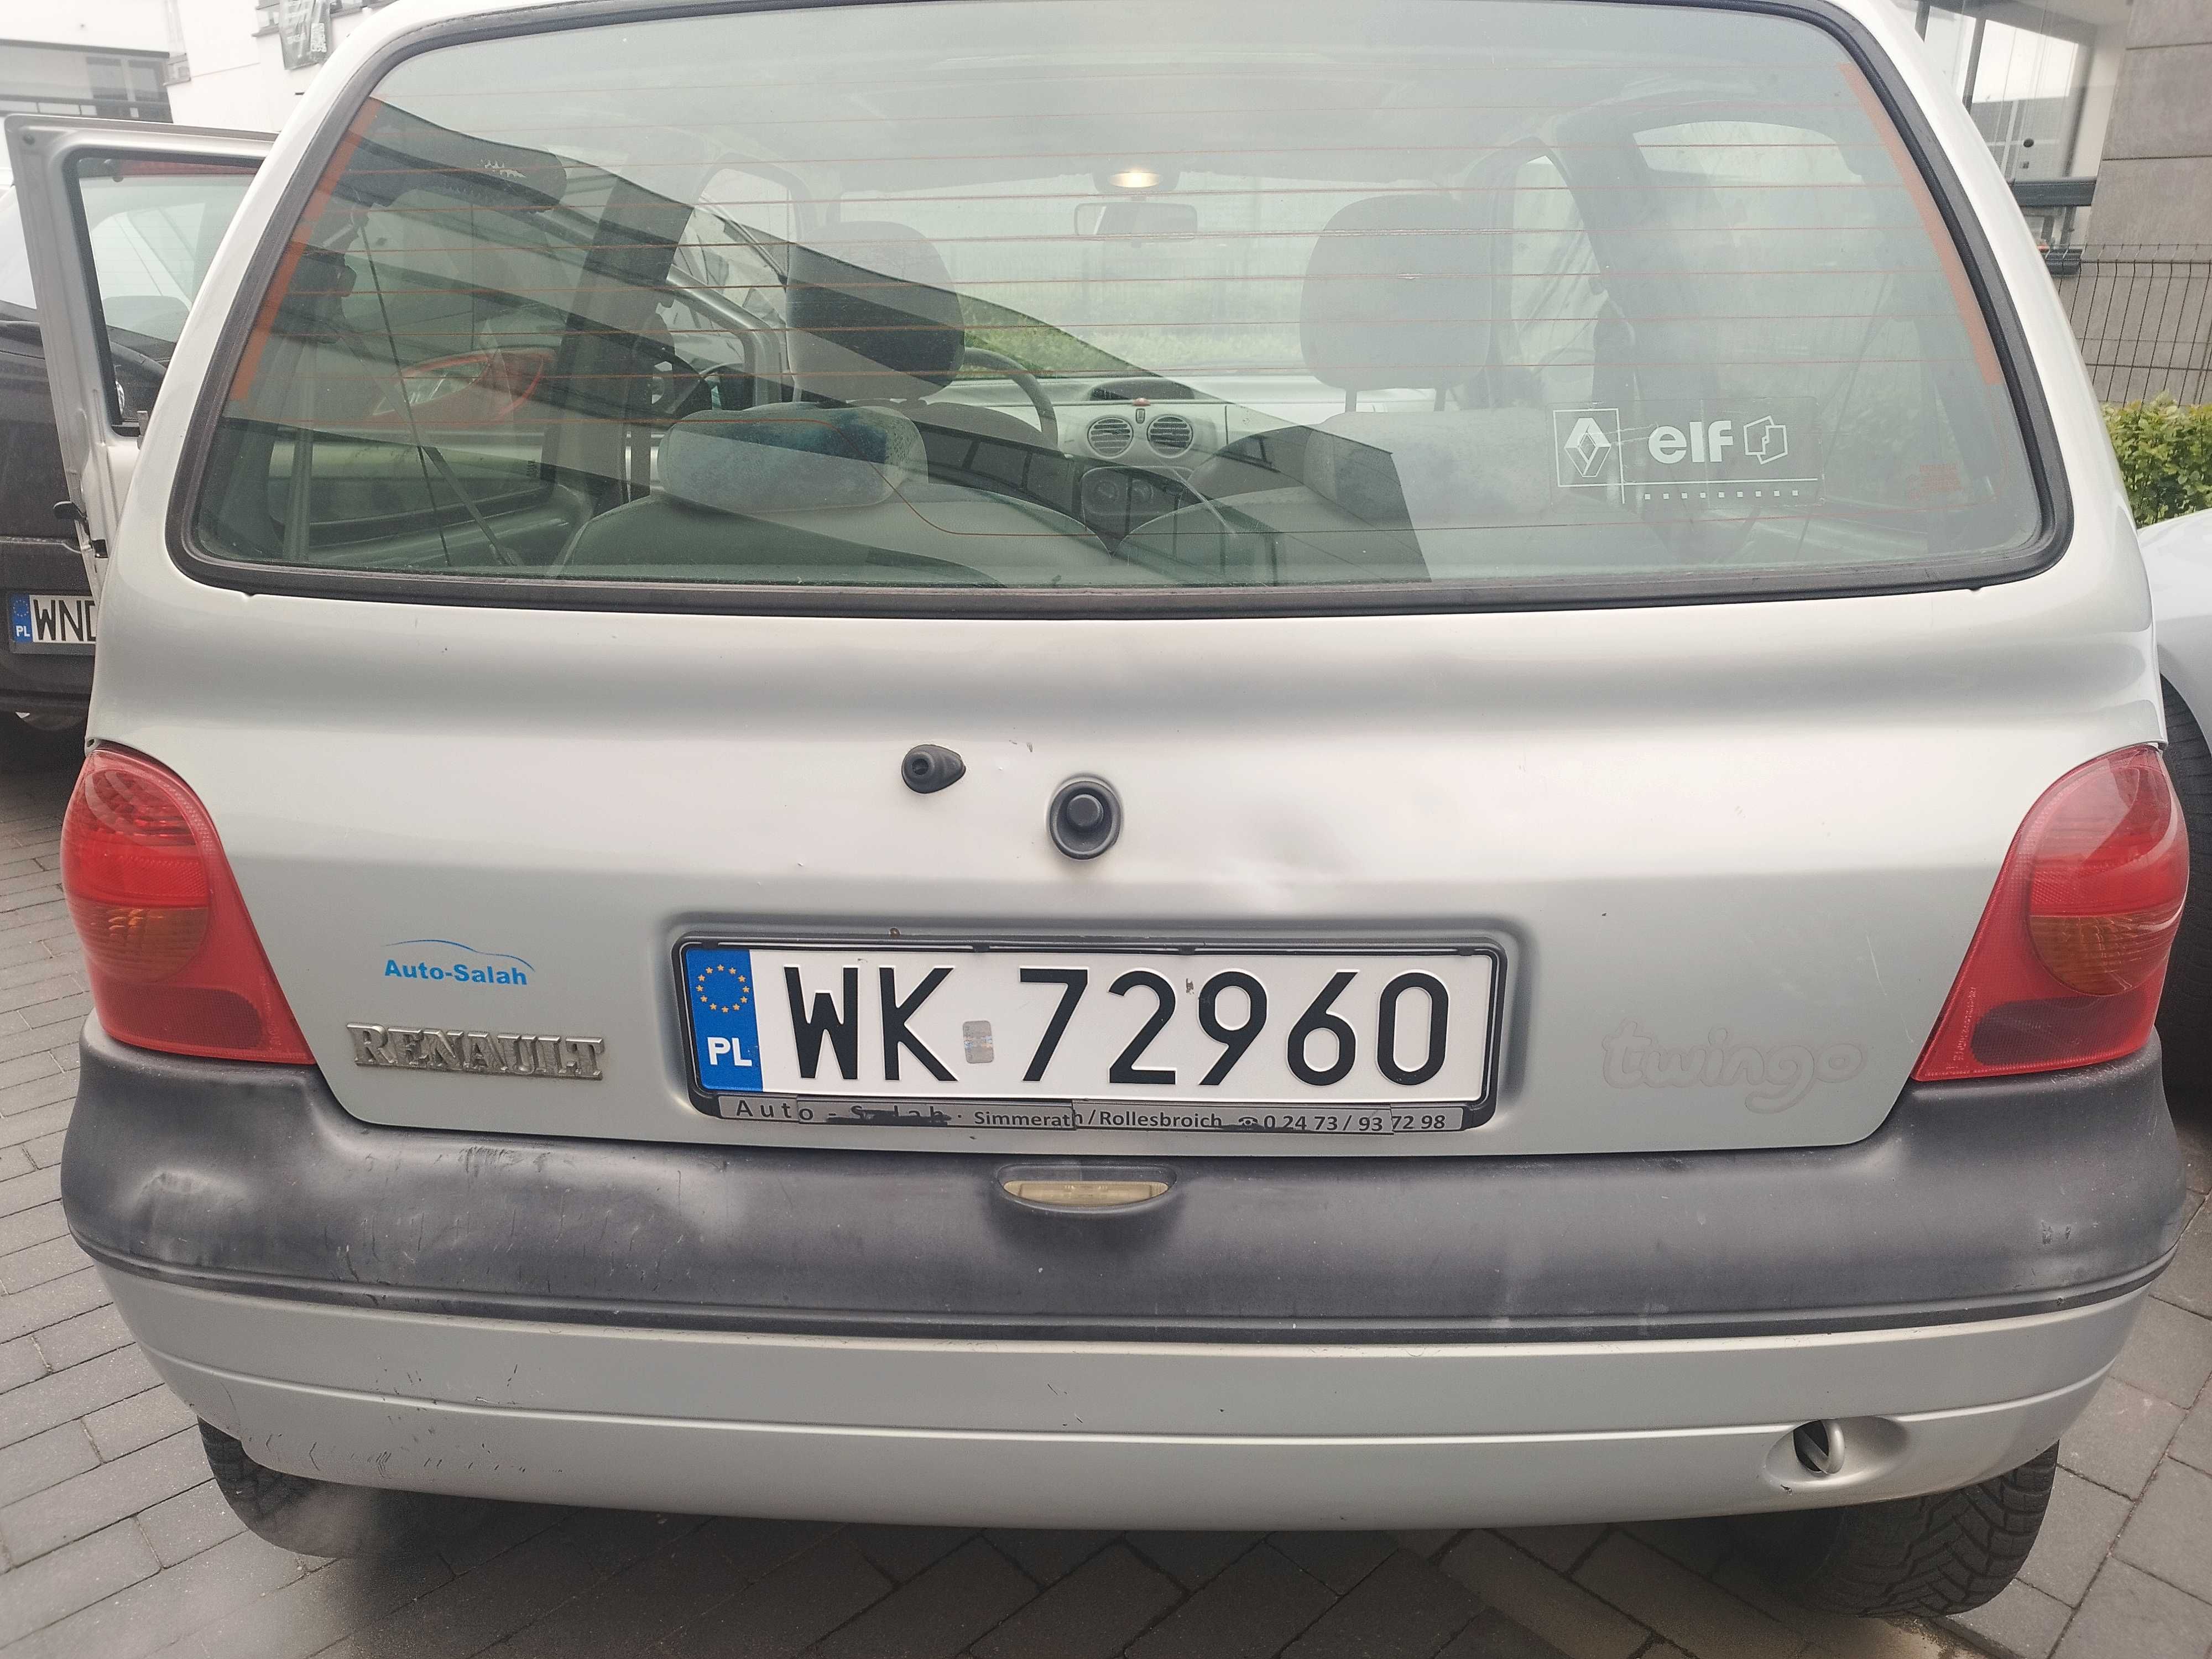 Renault Twingo 1.2 8v 2001